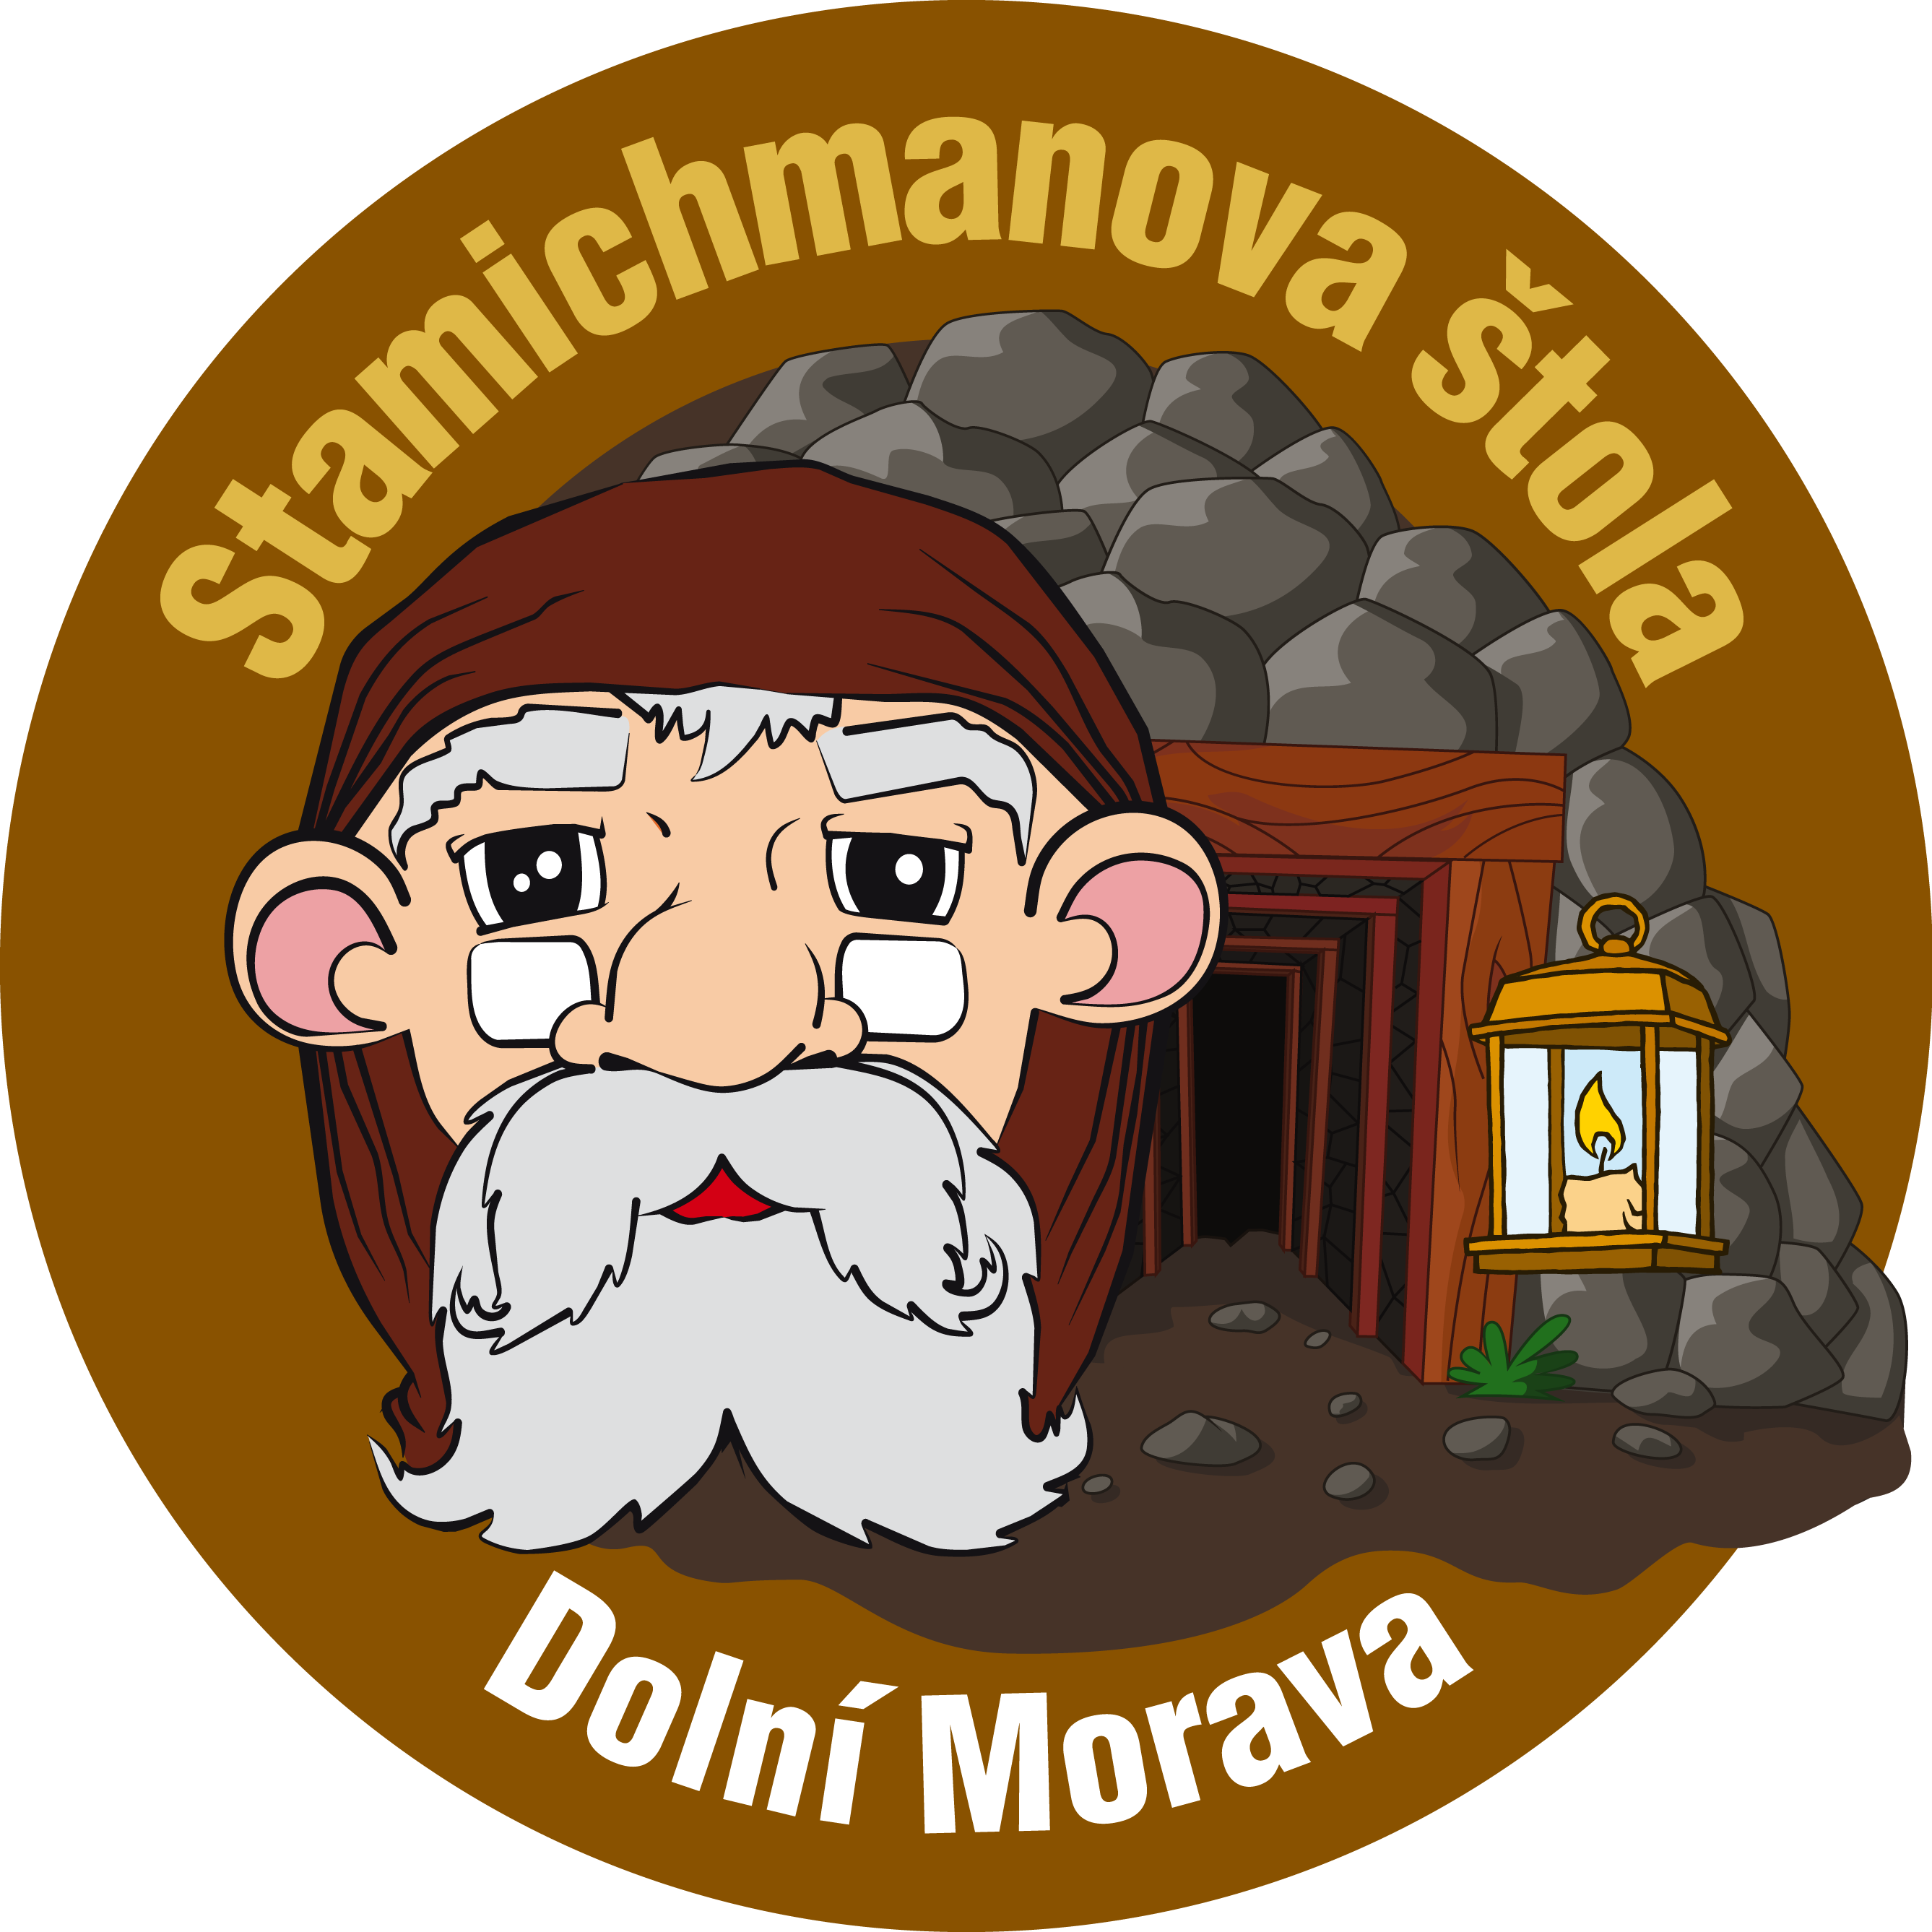 Stamichman_logo